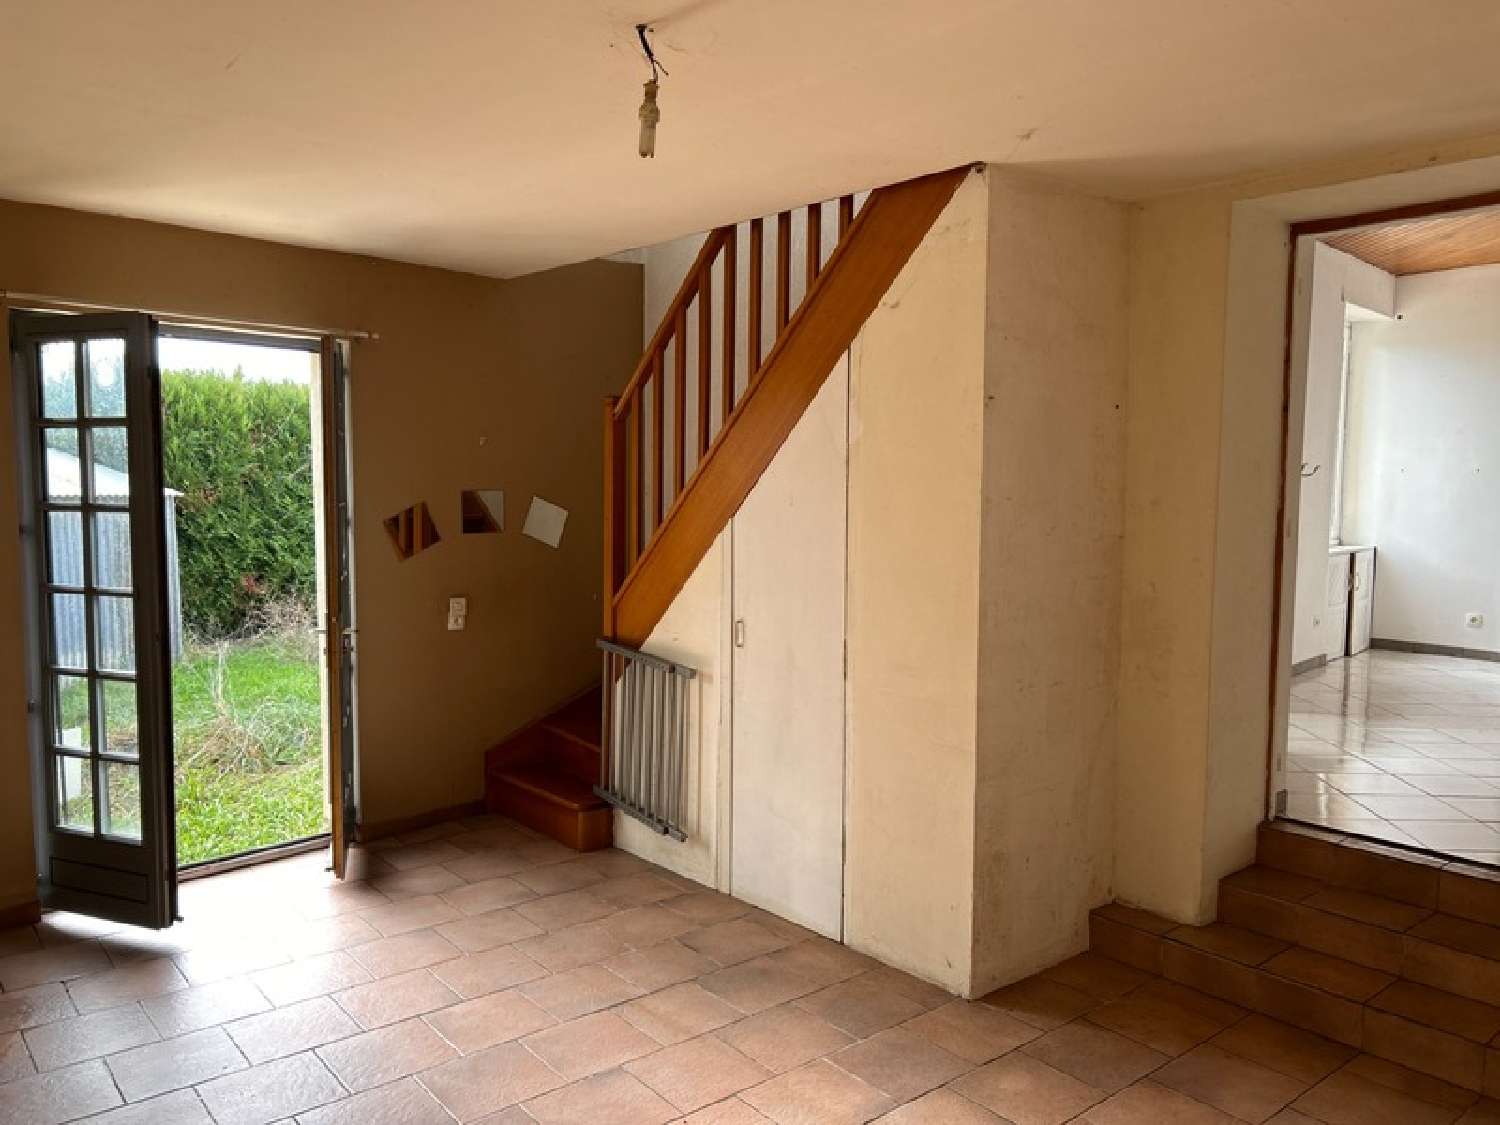  for sale house Dissay-sous-Courcillon Sarthe 5